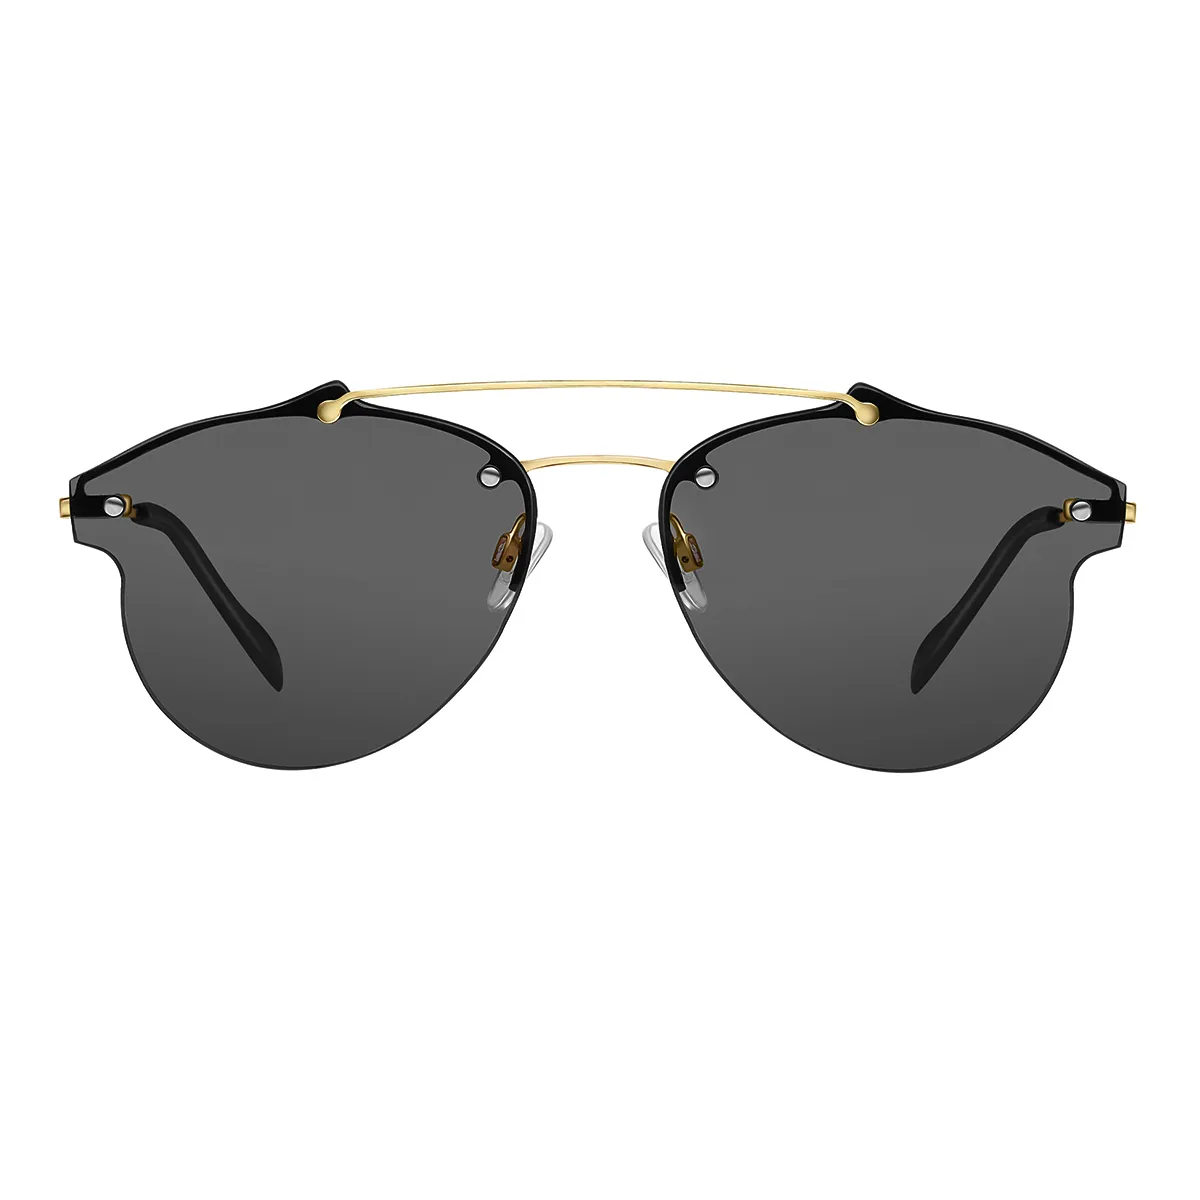 Fashion Aviator Gold/1  Sunglasses for Women & Men